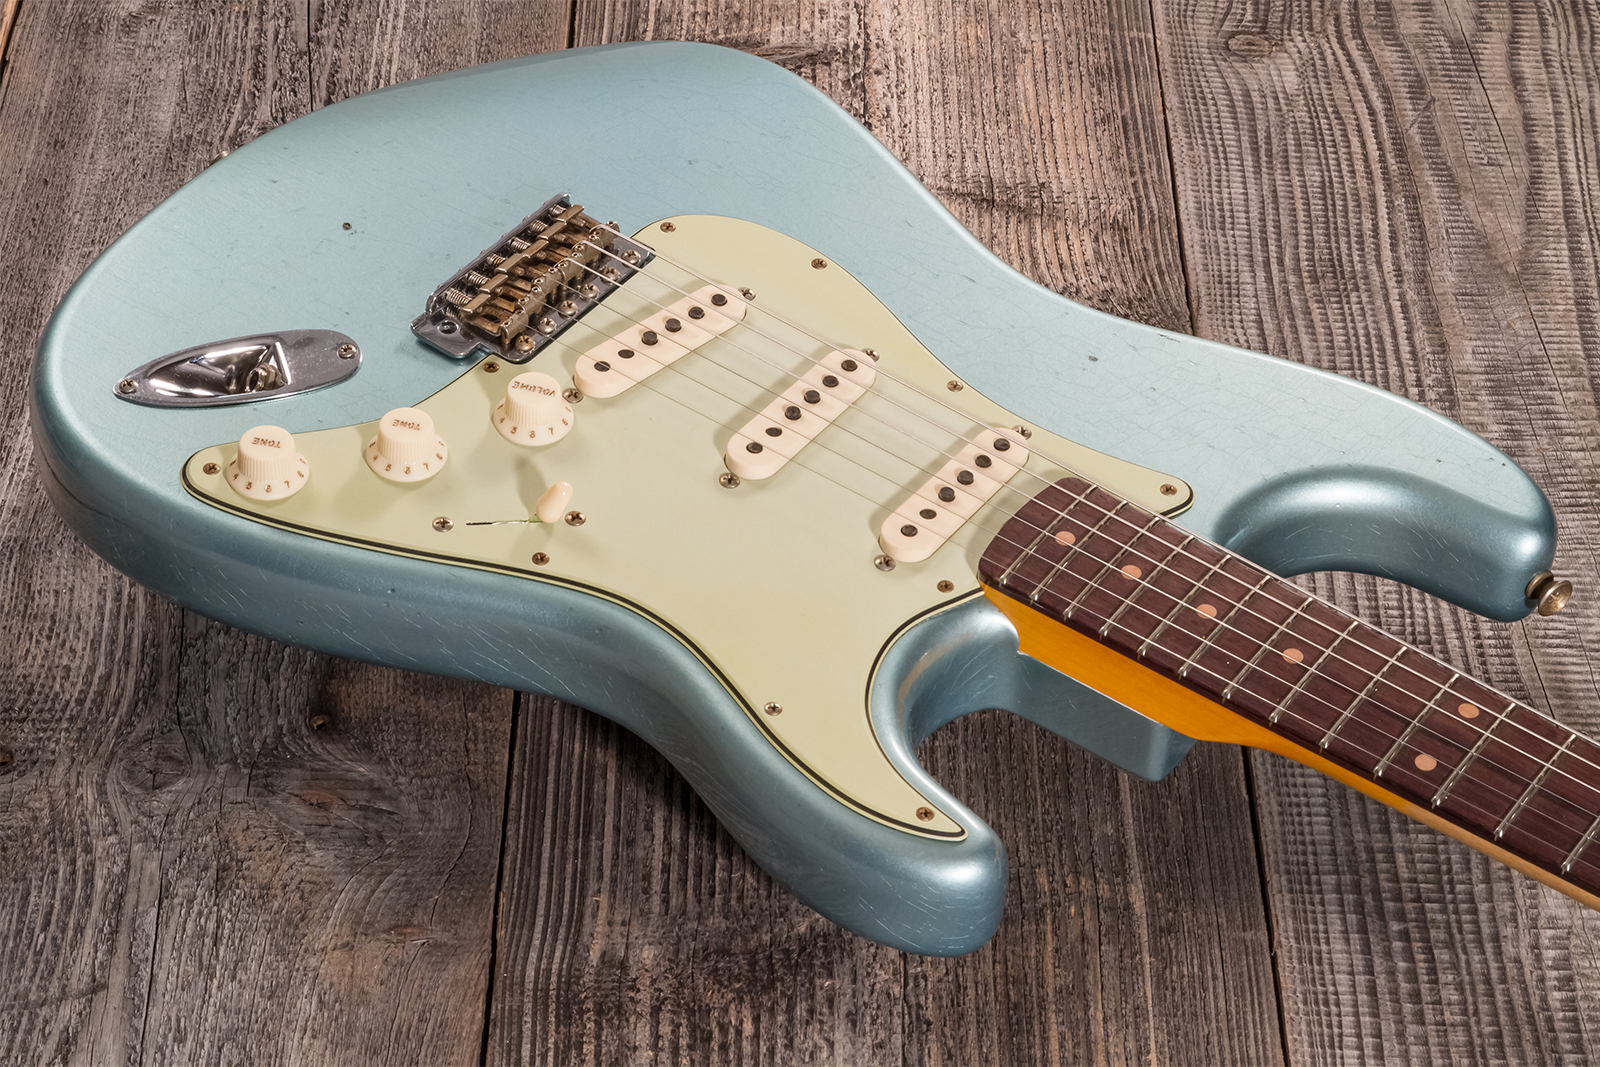 Fender Custom Shop Strat 1959 3s Trem Rw #cz570883 - Journeyman Relic Teal Green Metallic - Str shape electric guitar - Variation 2